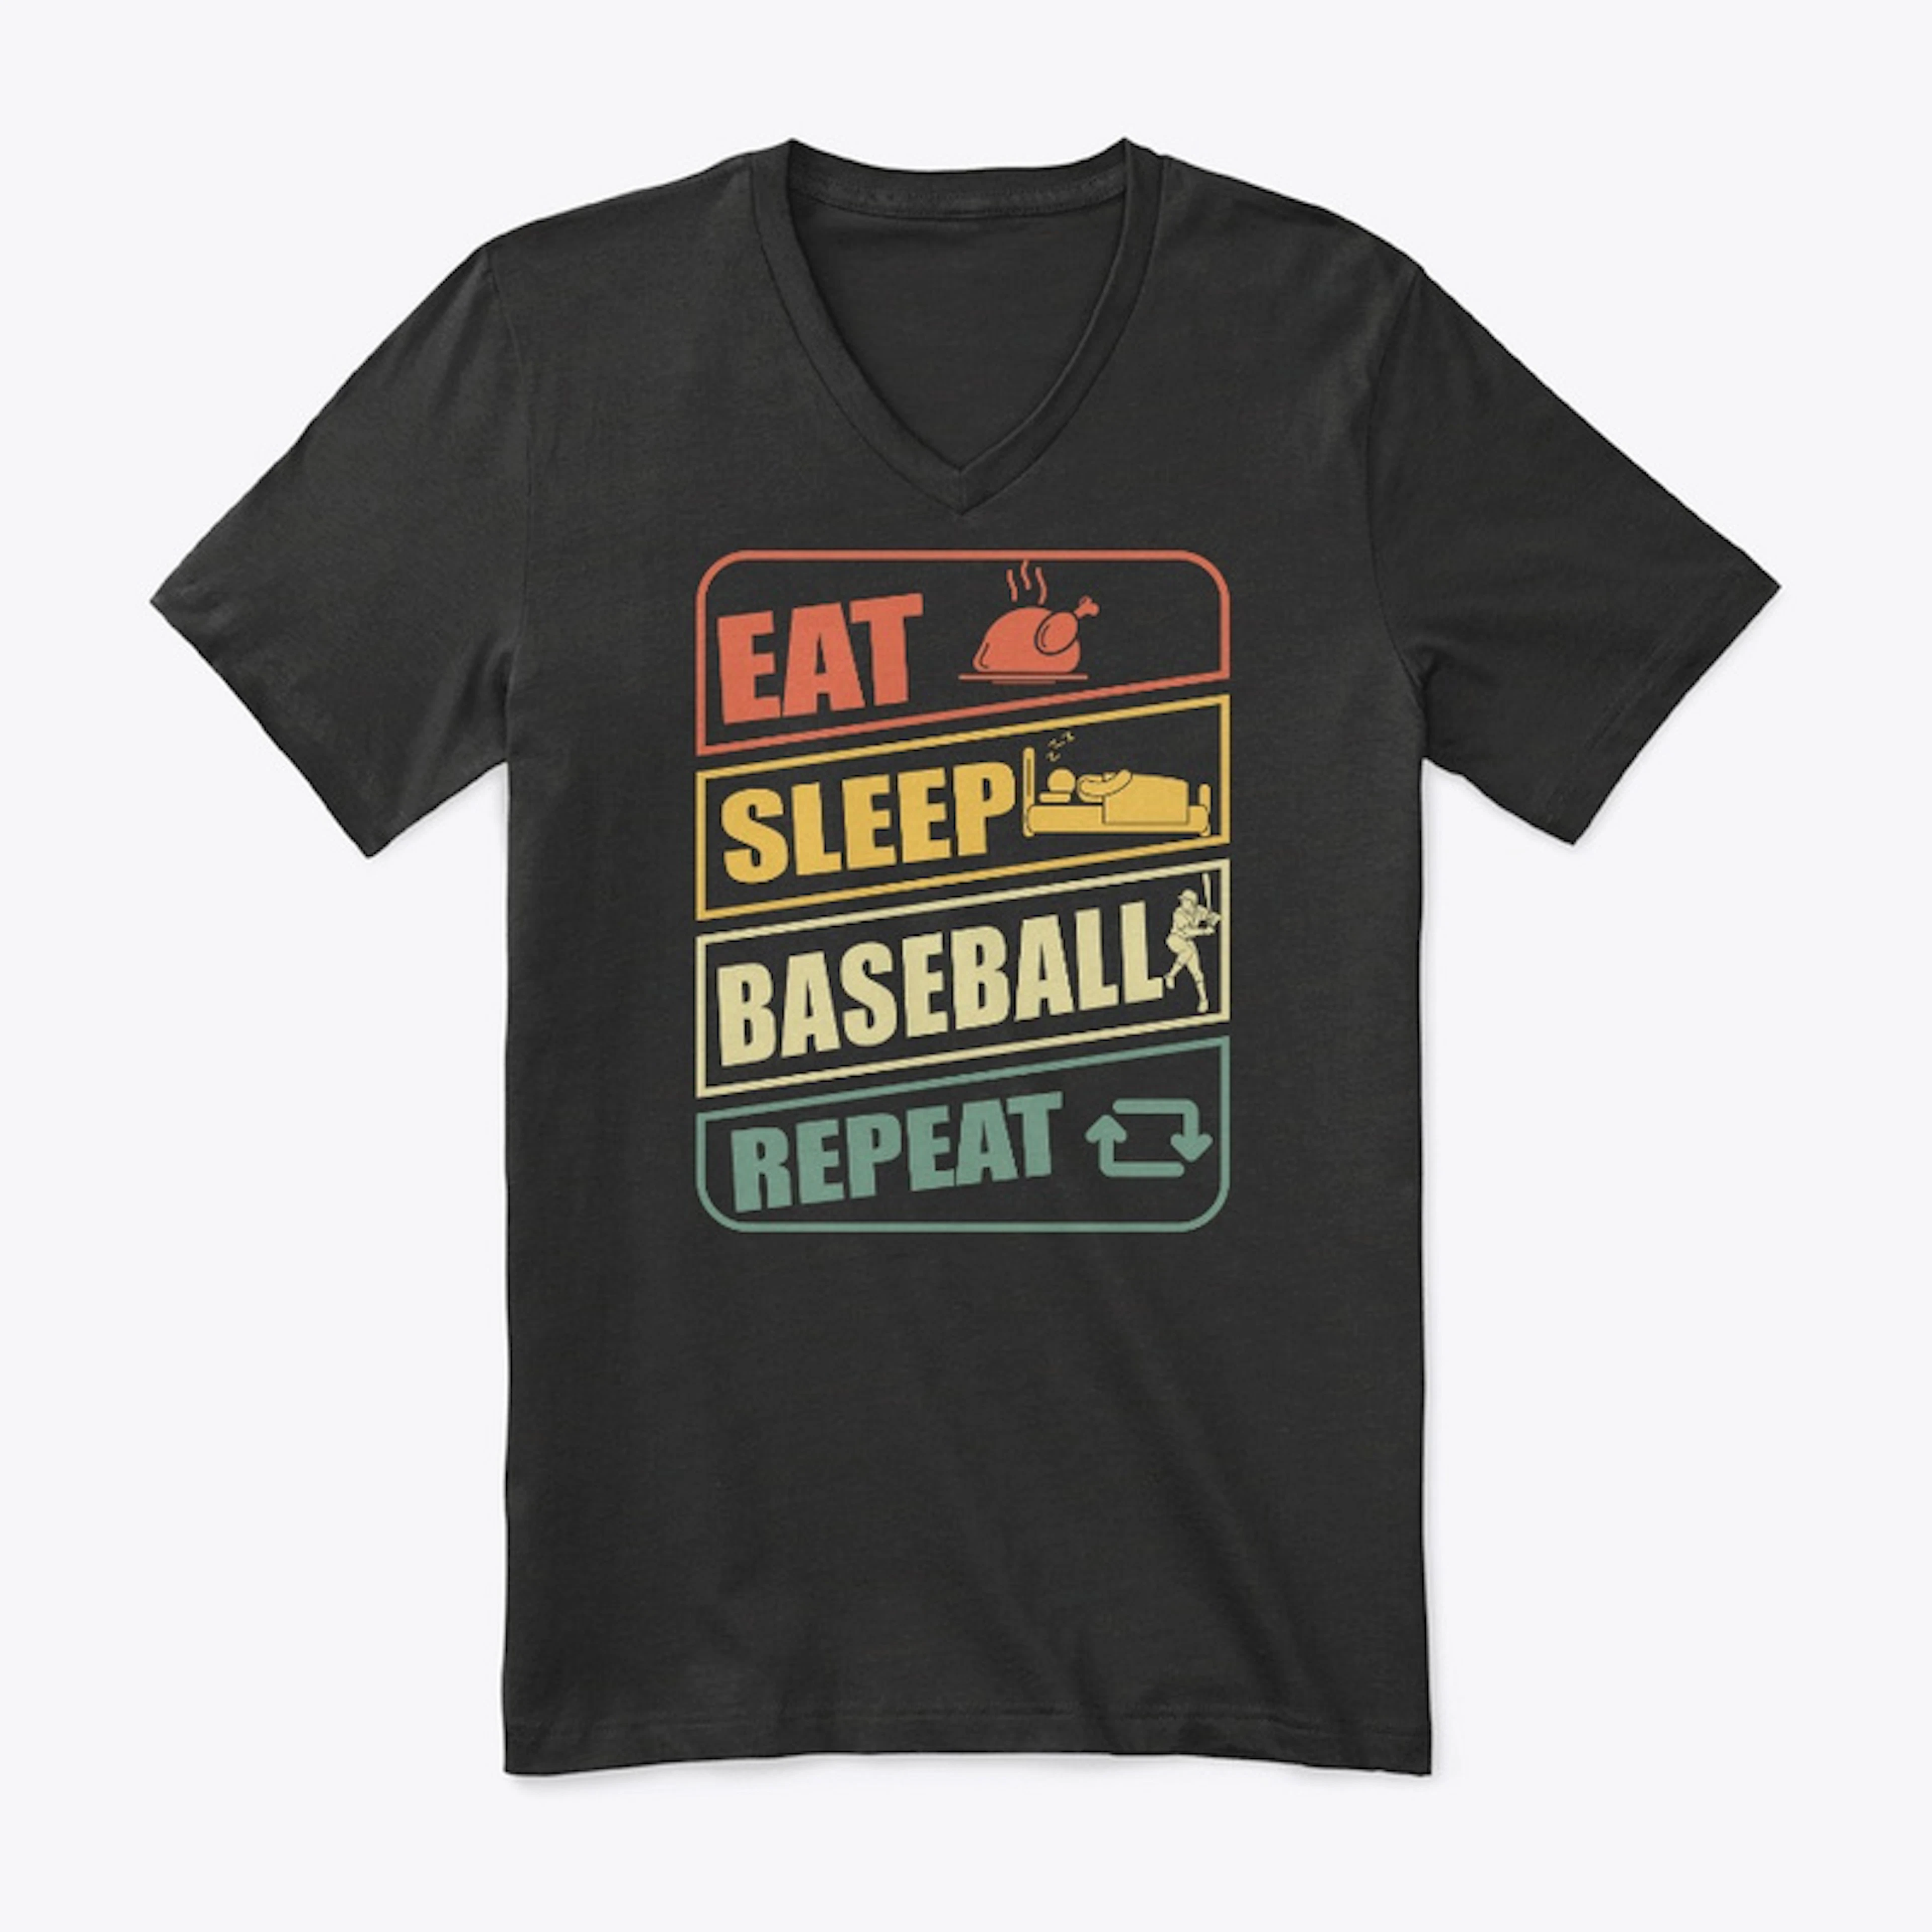 Eat. Sleep. Baseball. Repeat!